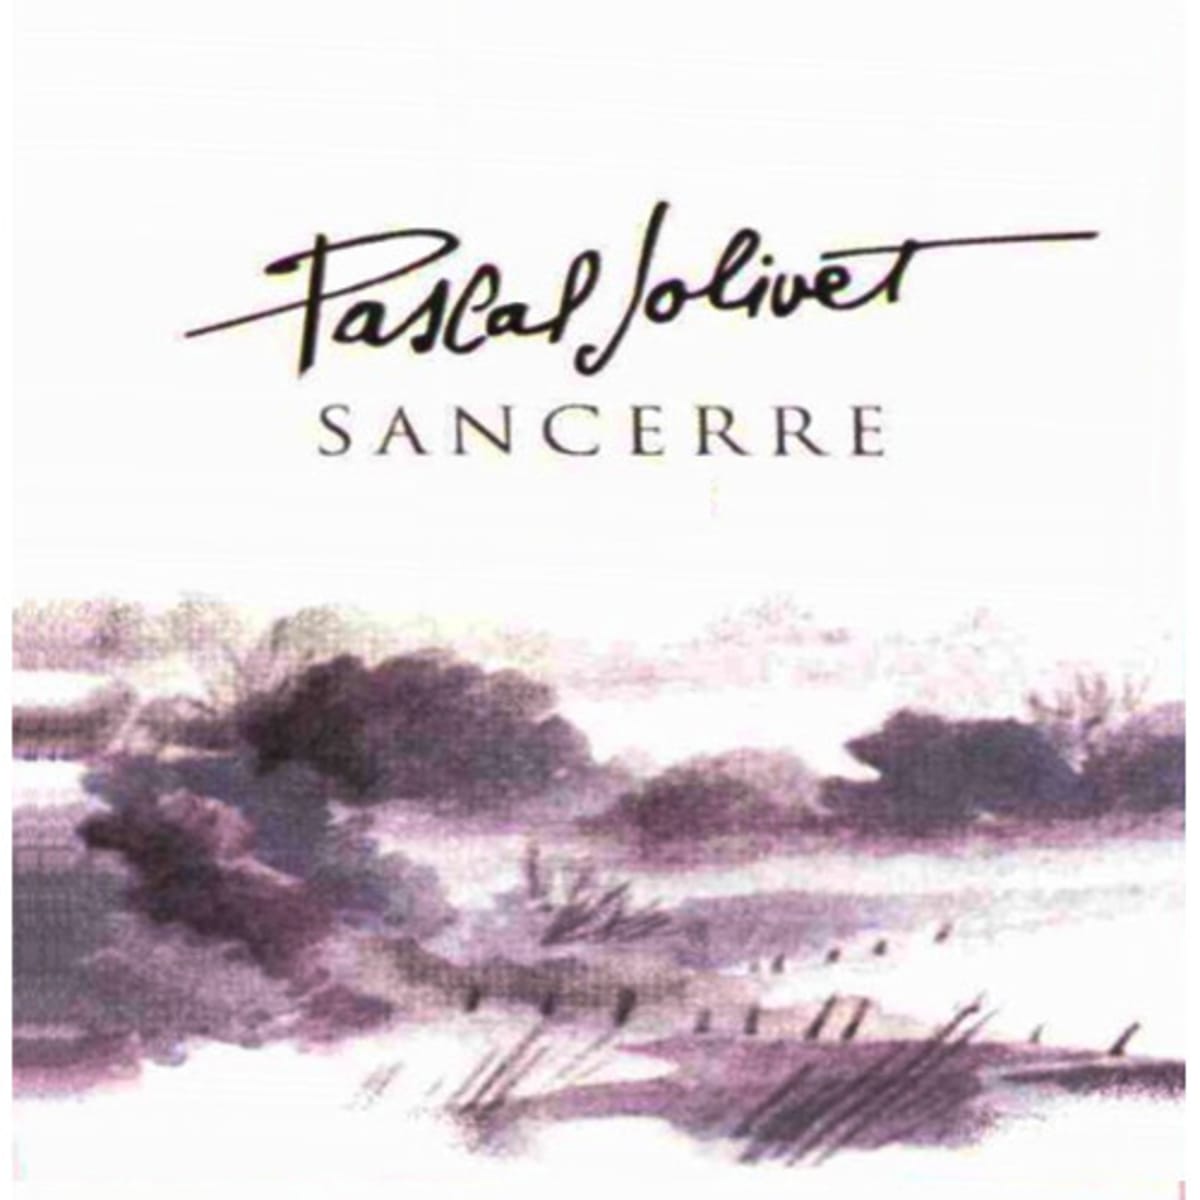 Pascal Jolivet Sancerre 2009 Front Label